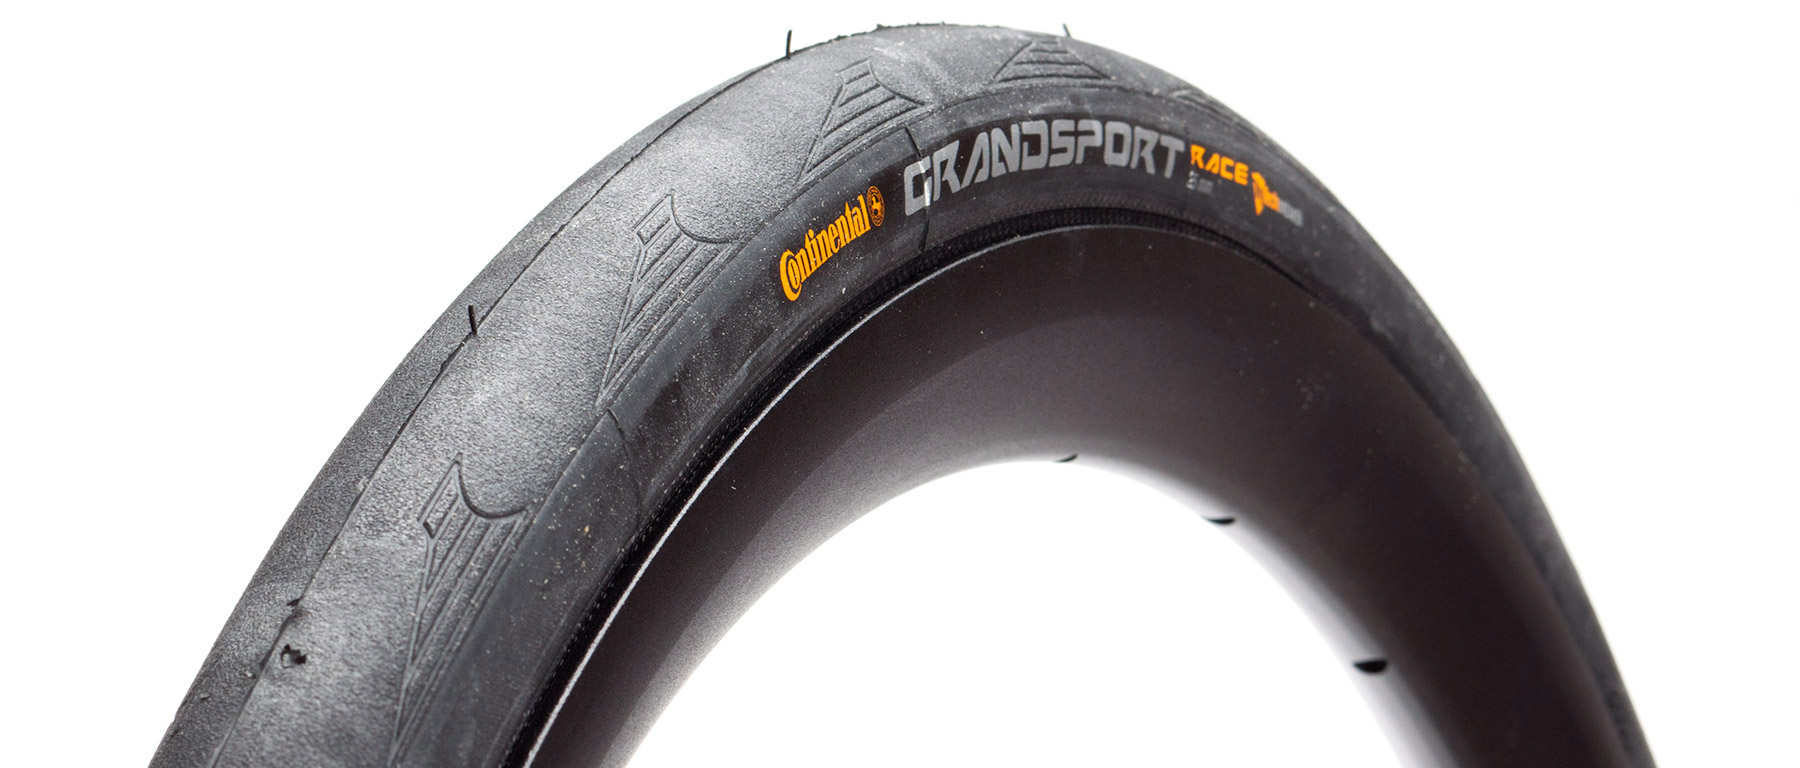 Continental Grand Sport Race Road Tire